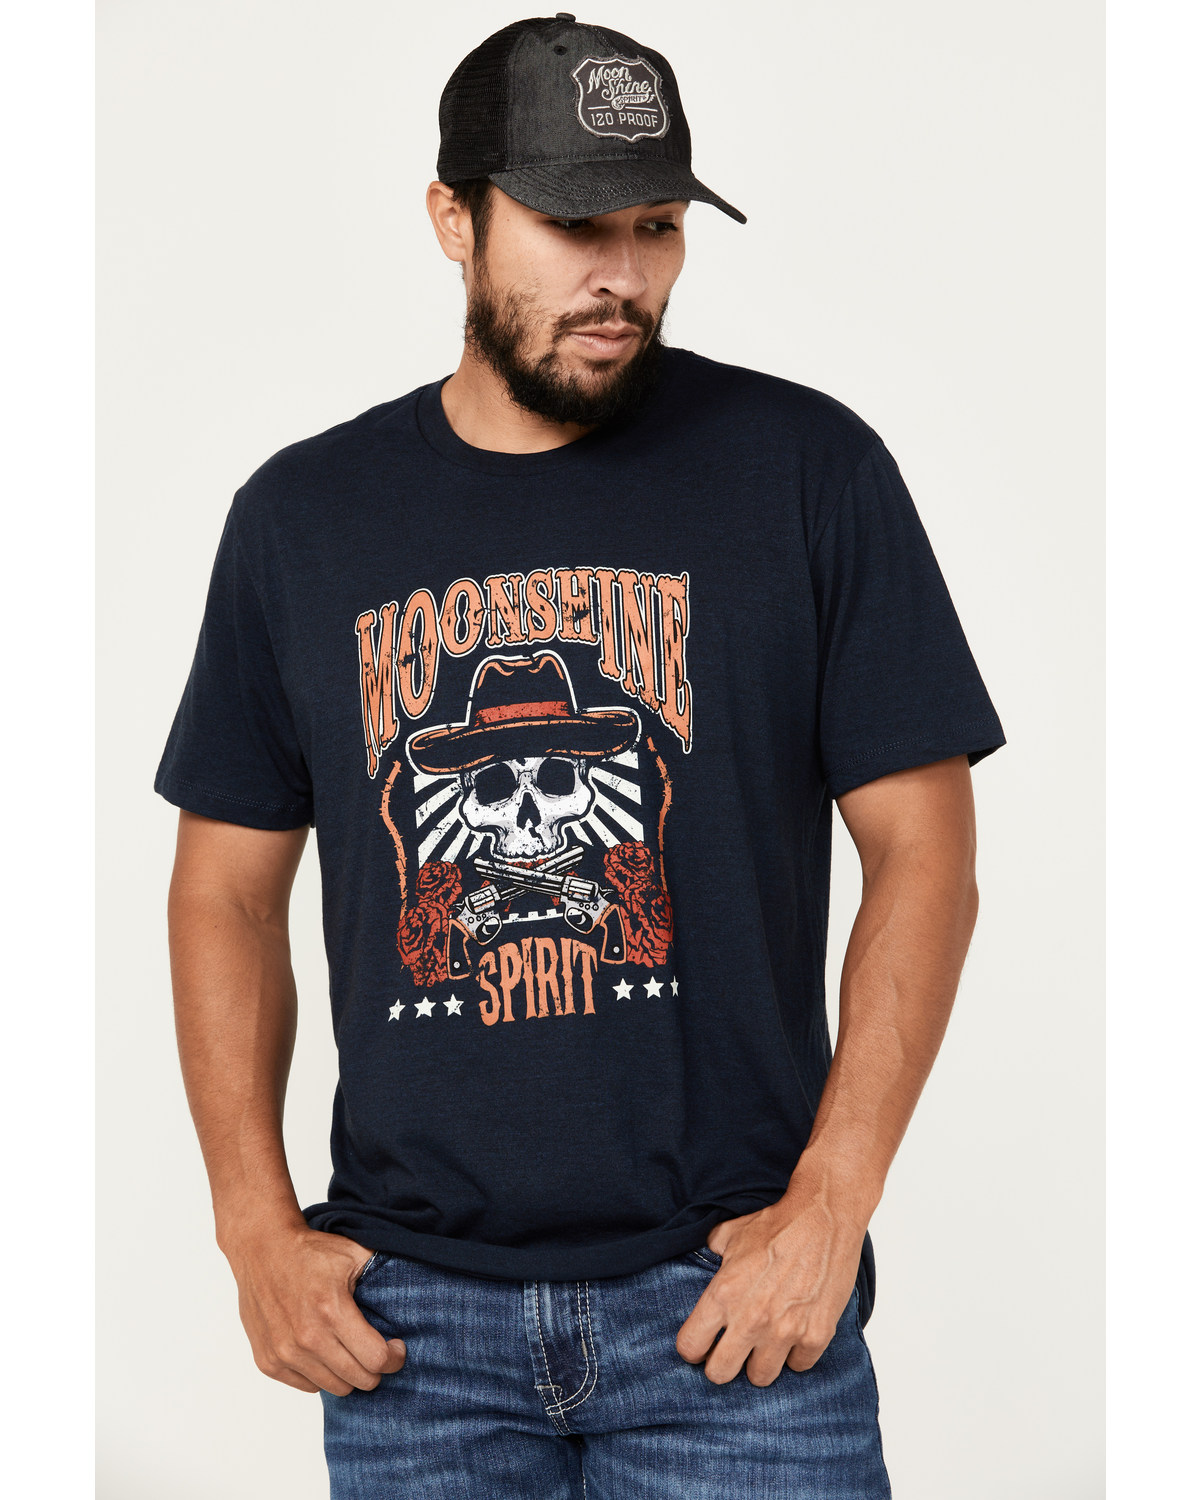 Moonshine Spirit Men's Guns and Roses Short Sleeve Graphic T-Shirt